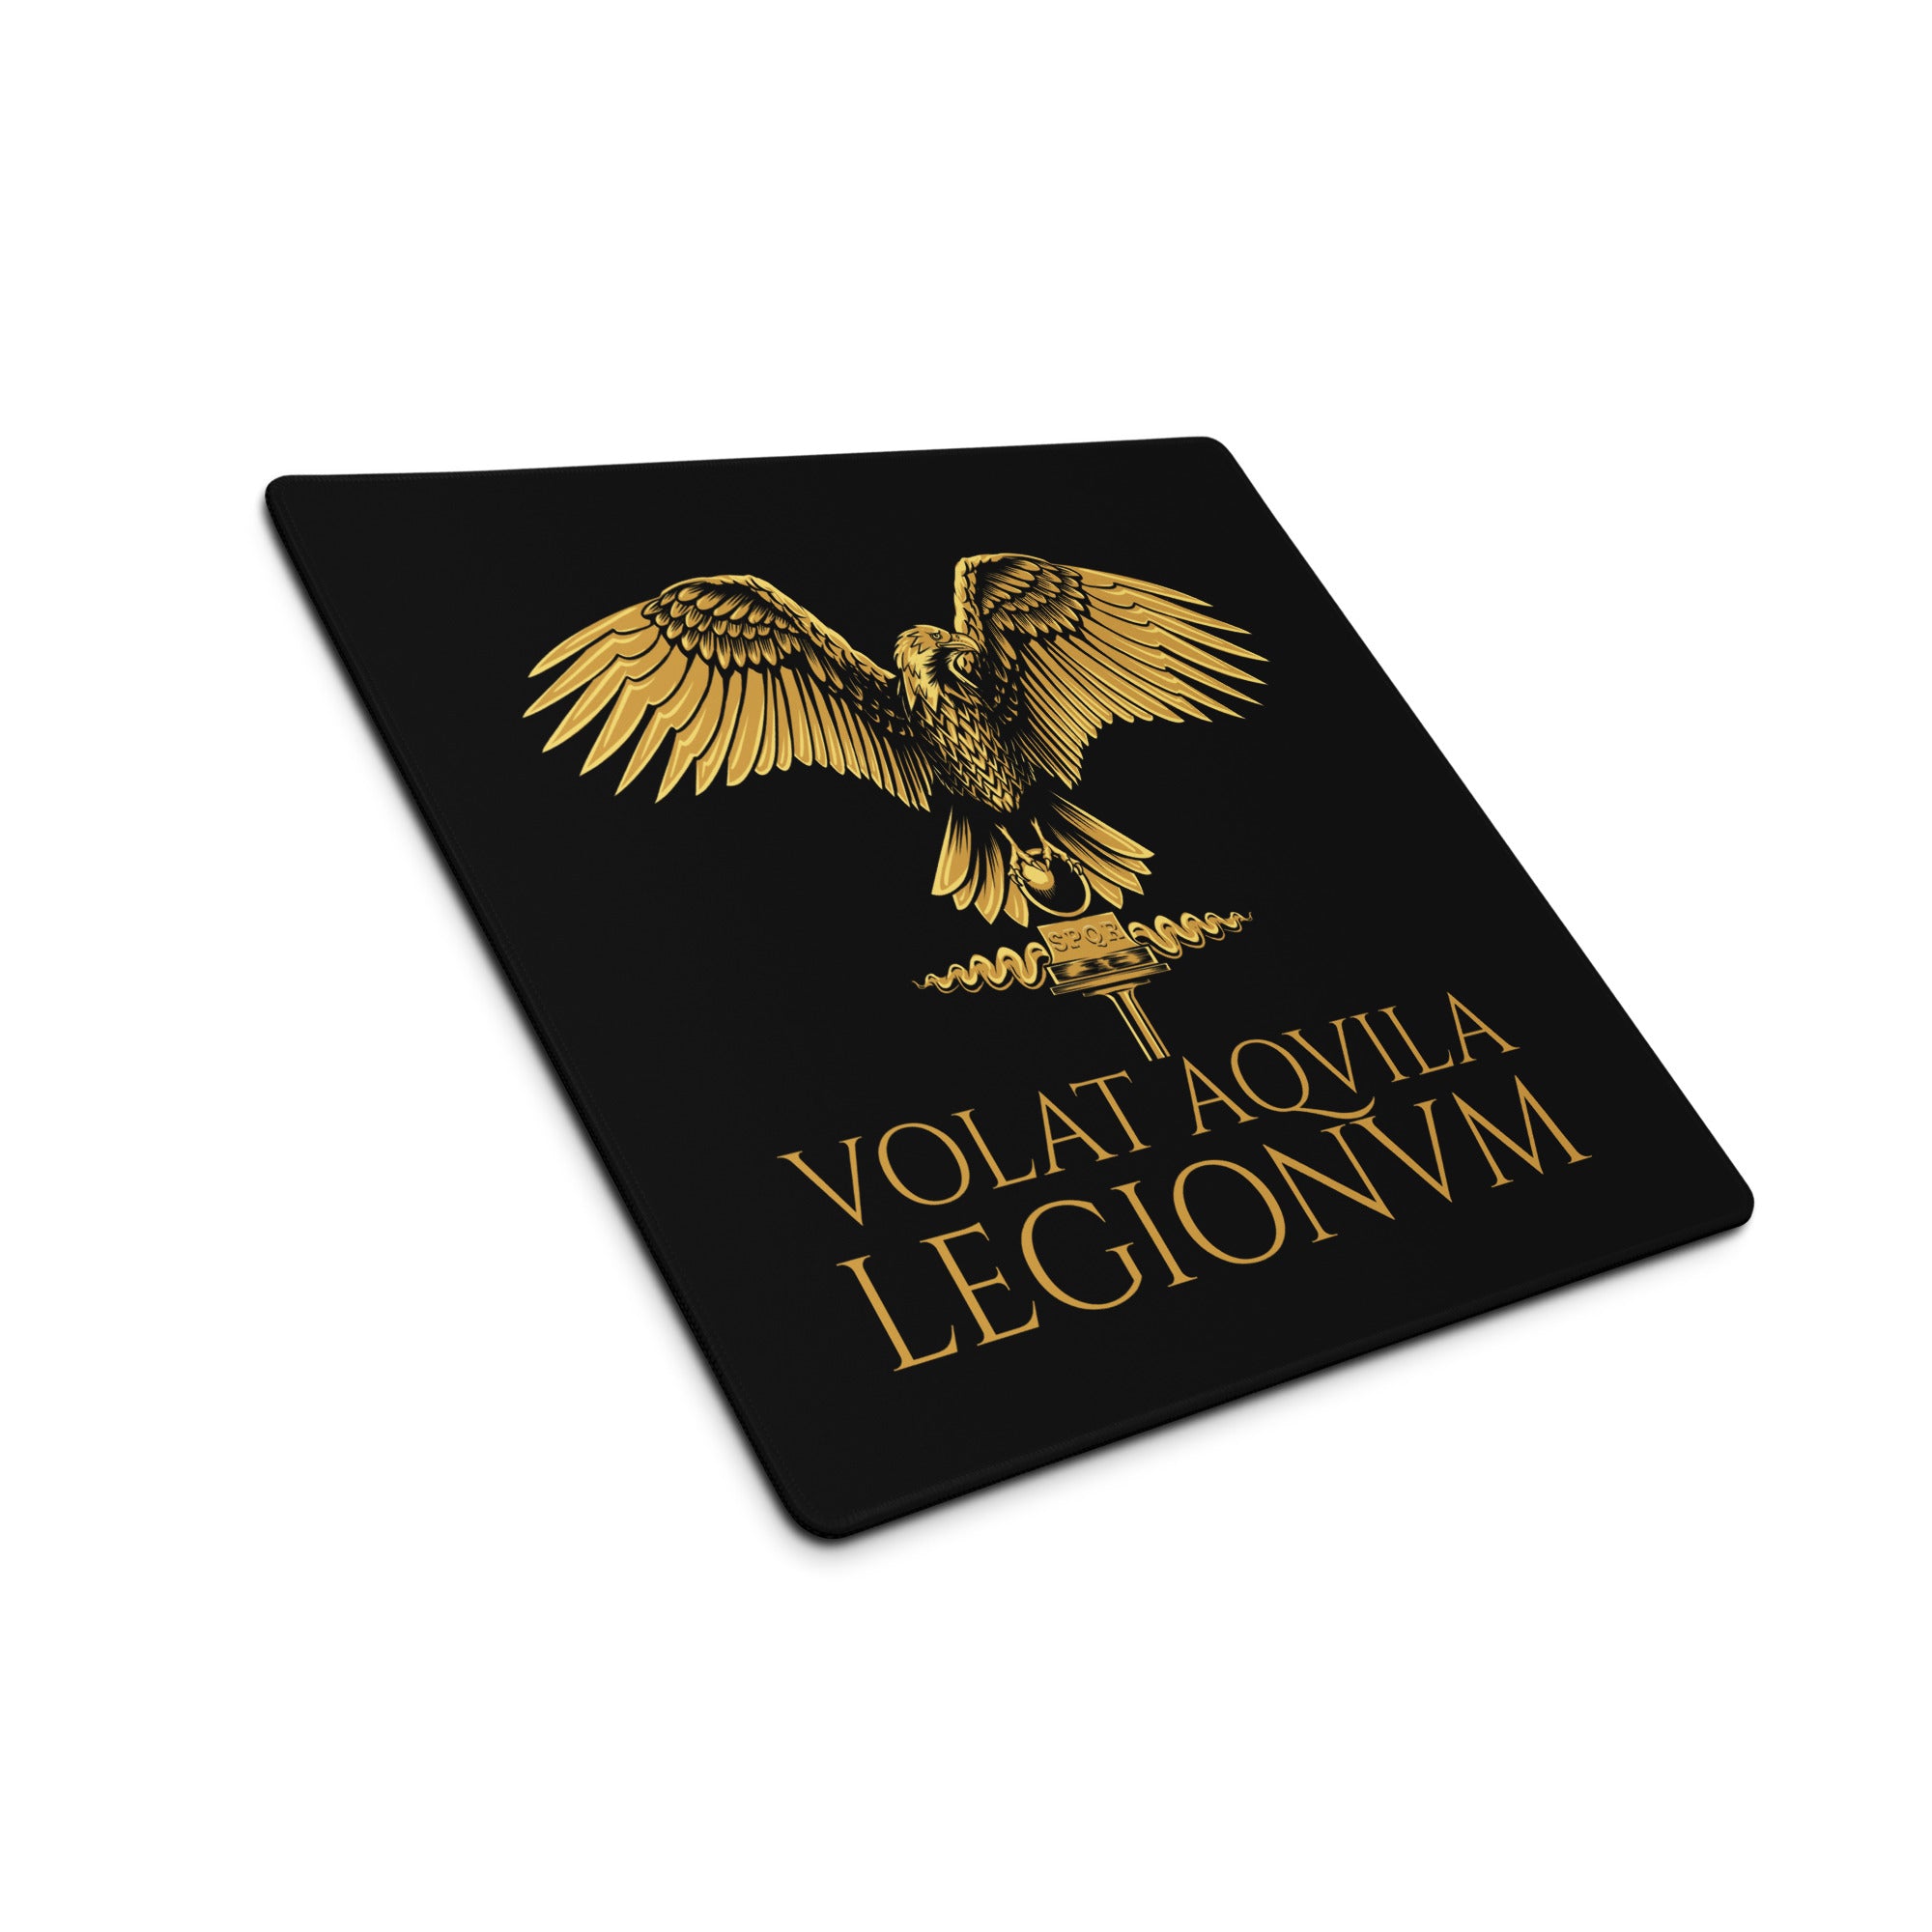 Volat Aquila Legionum - Classical Latin - Ancient Roman Legionary Eagle Gaming Mouse Pad